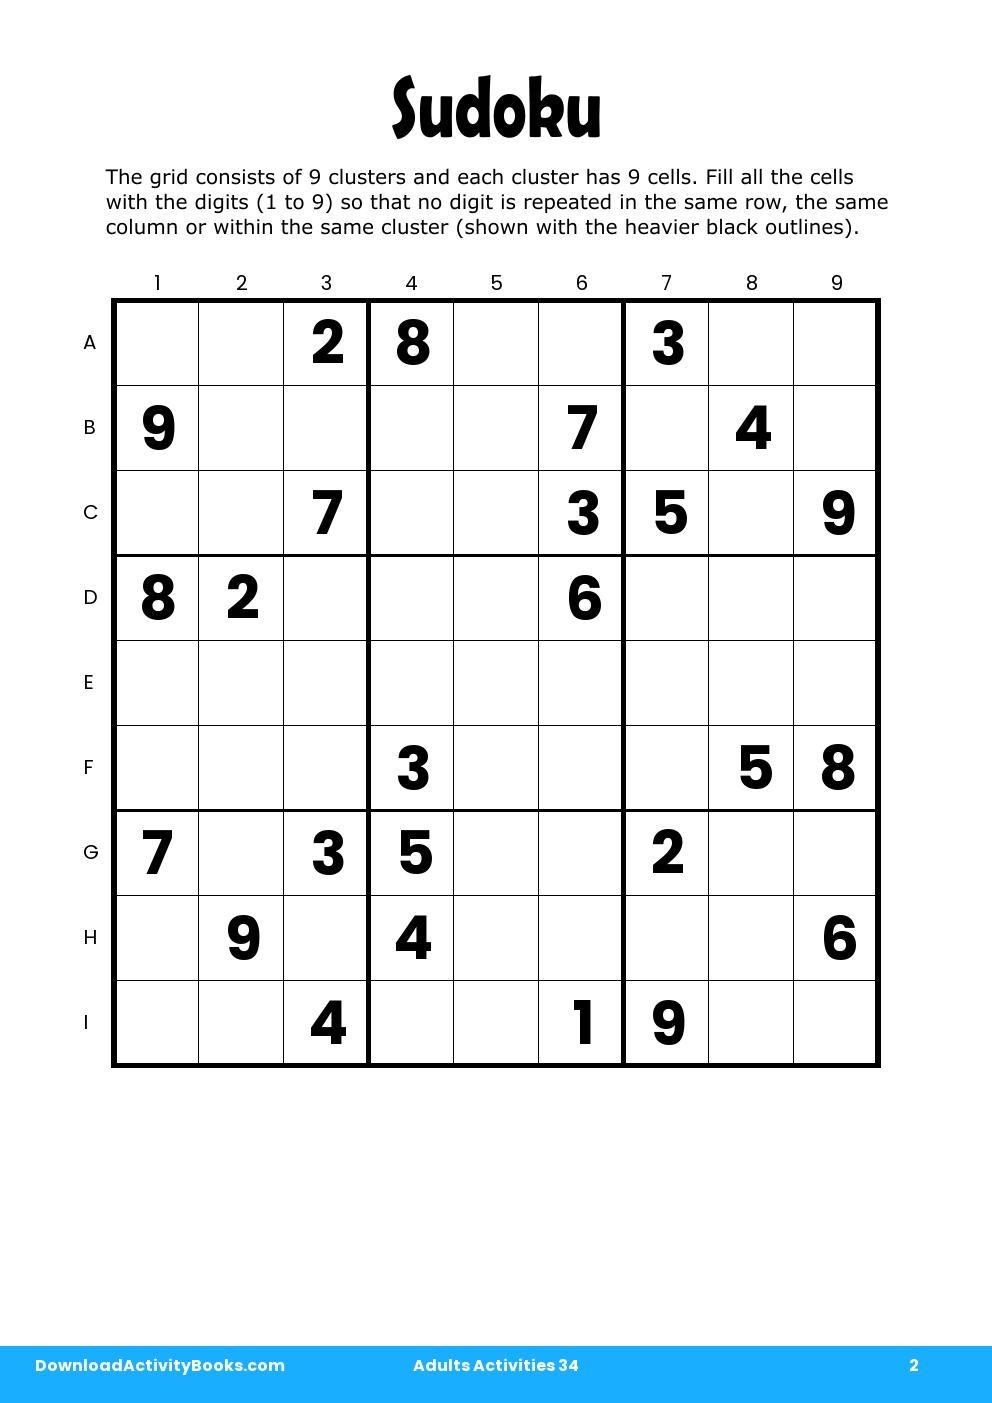 Sudoku in Adults Activities 34